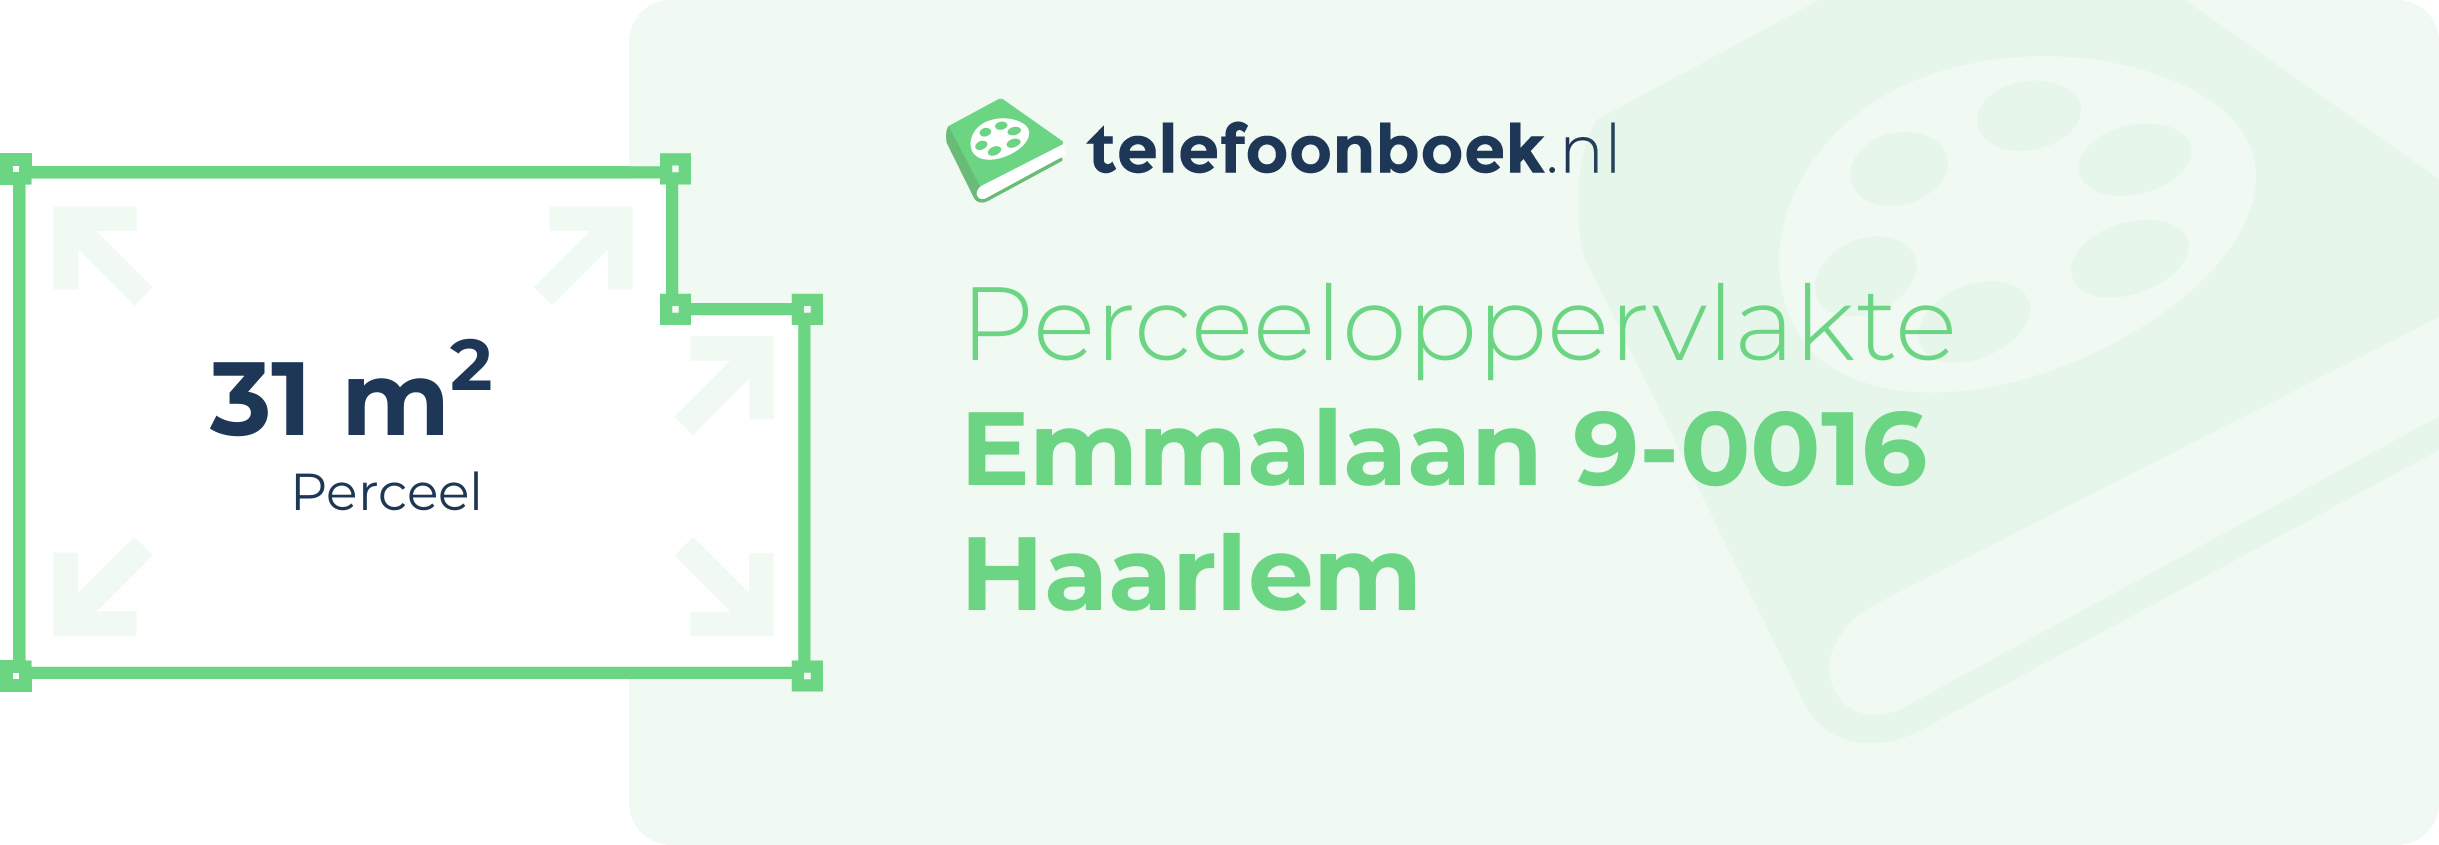 Perceeloppervlakte Emmalaan 9-0016 Haarlem